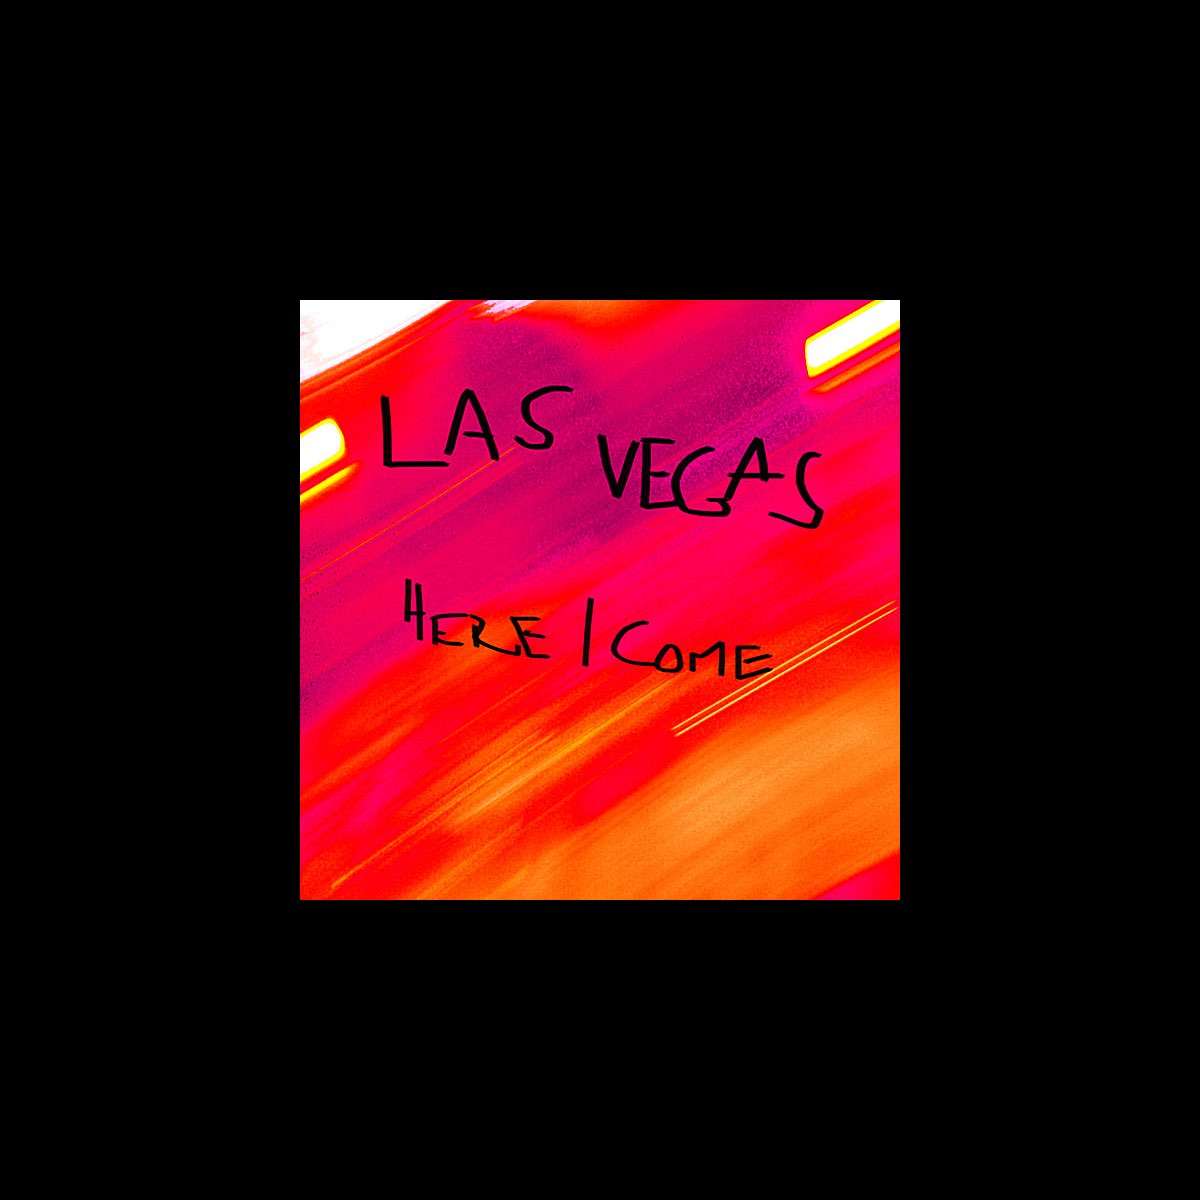 Las Vegas (Here I Come) - Single - Album by Hyacinth House - Apple Music